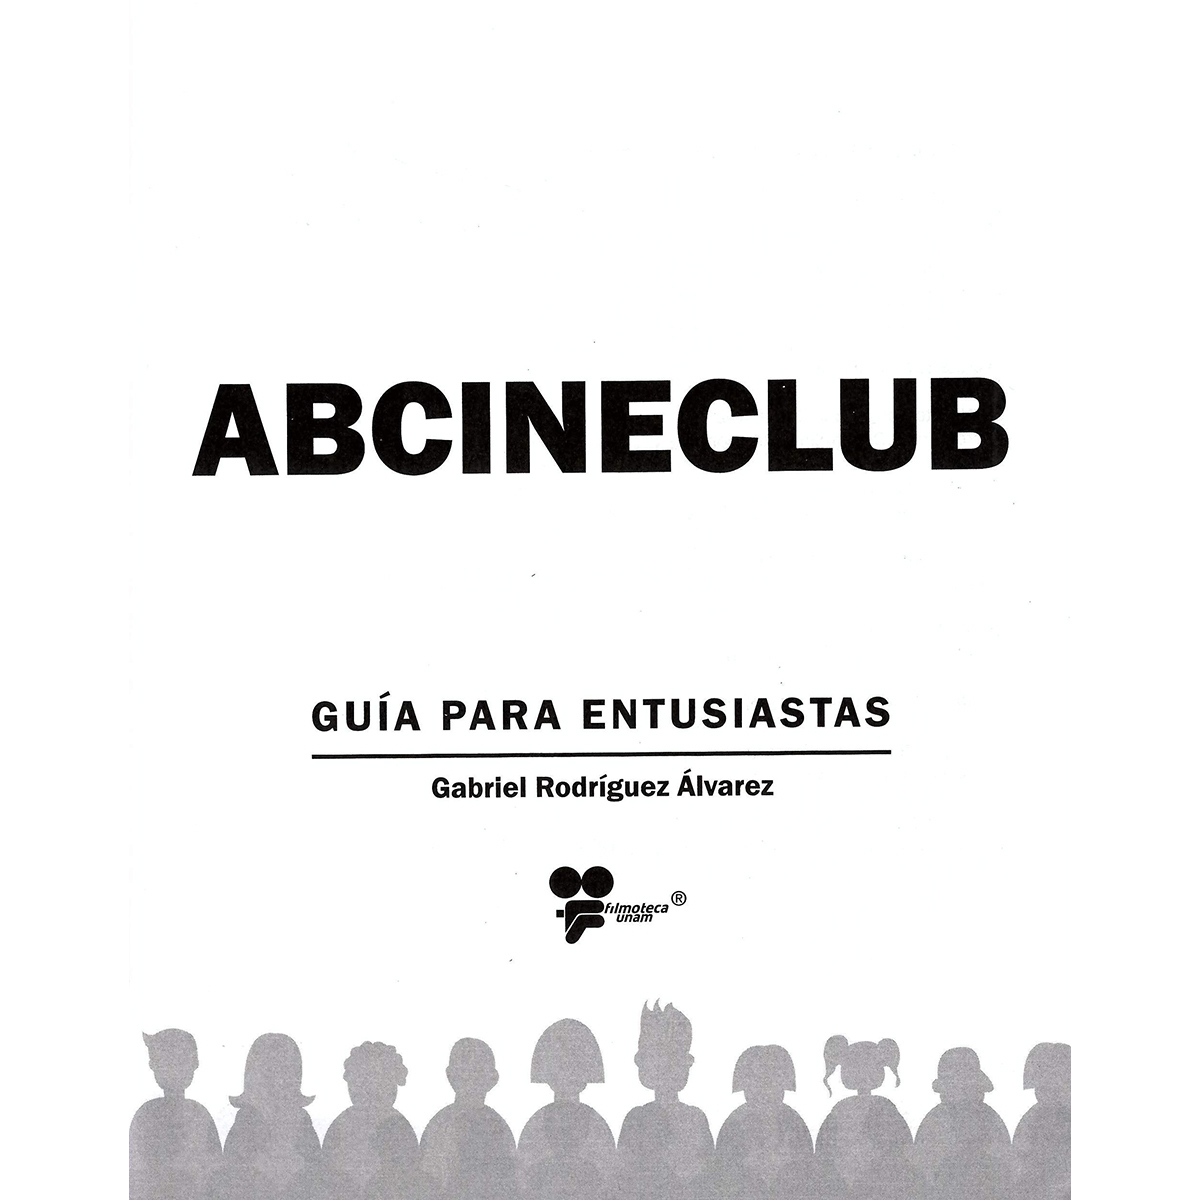 ABCINECLUB, GUÍA PARA ENTUSIASTAS